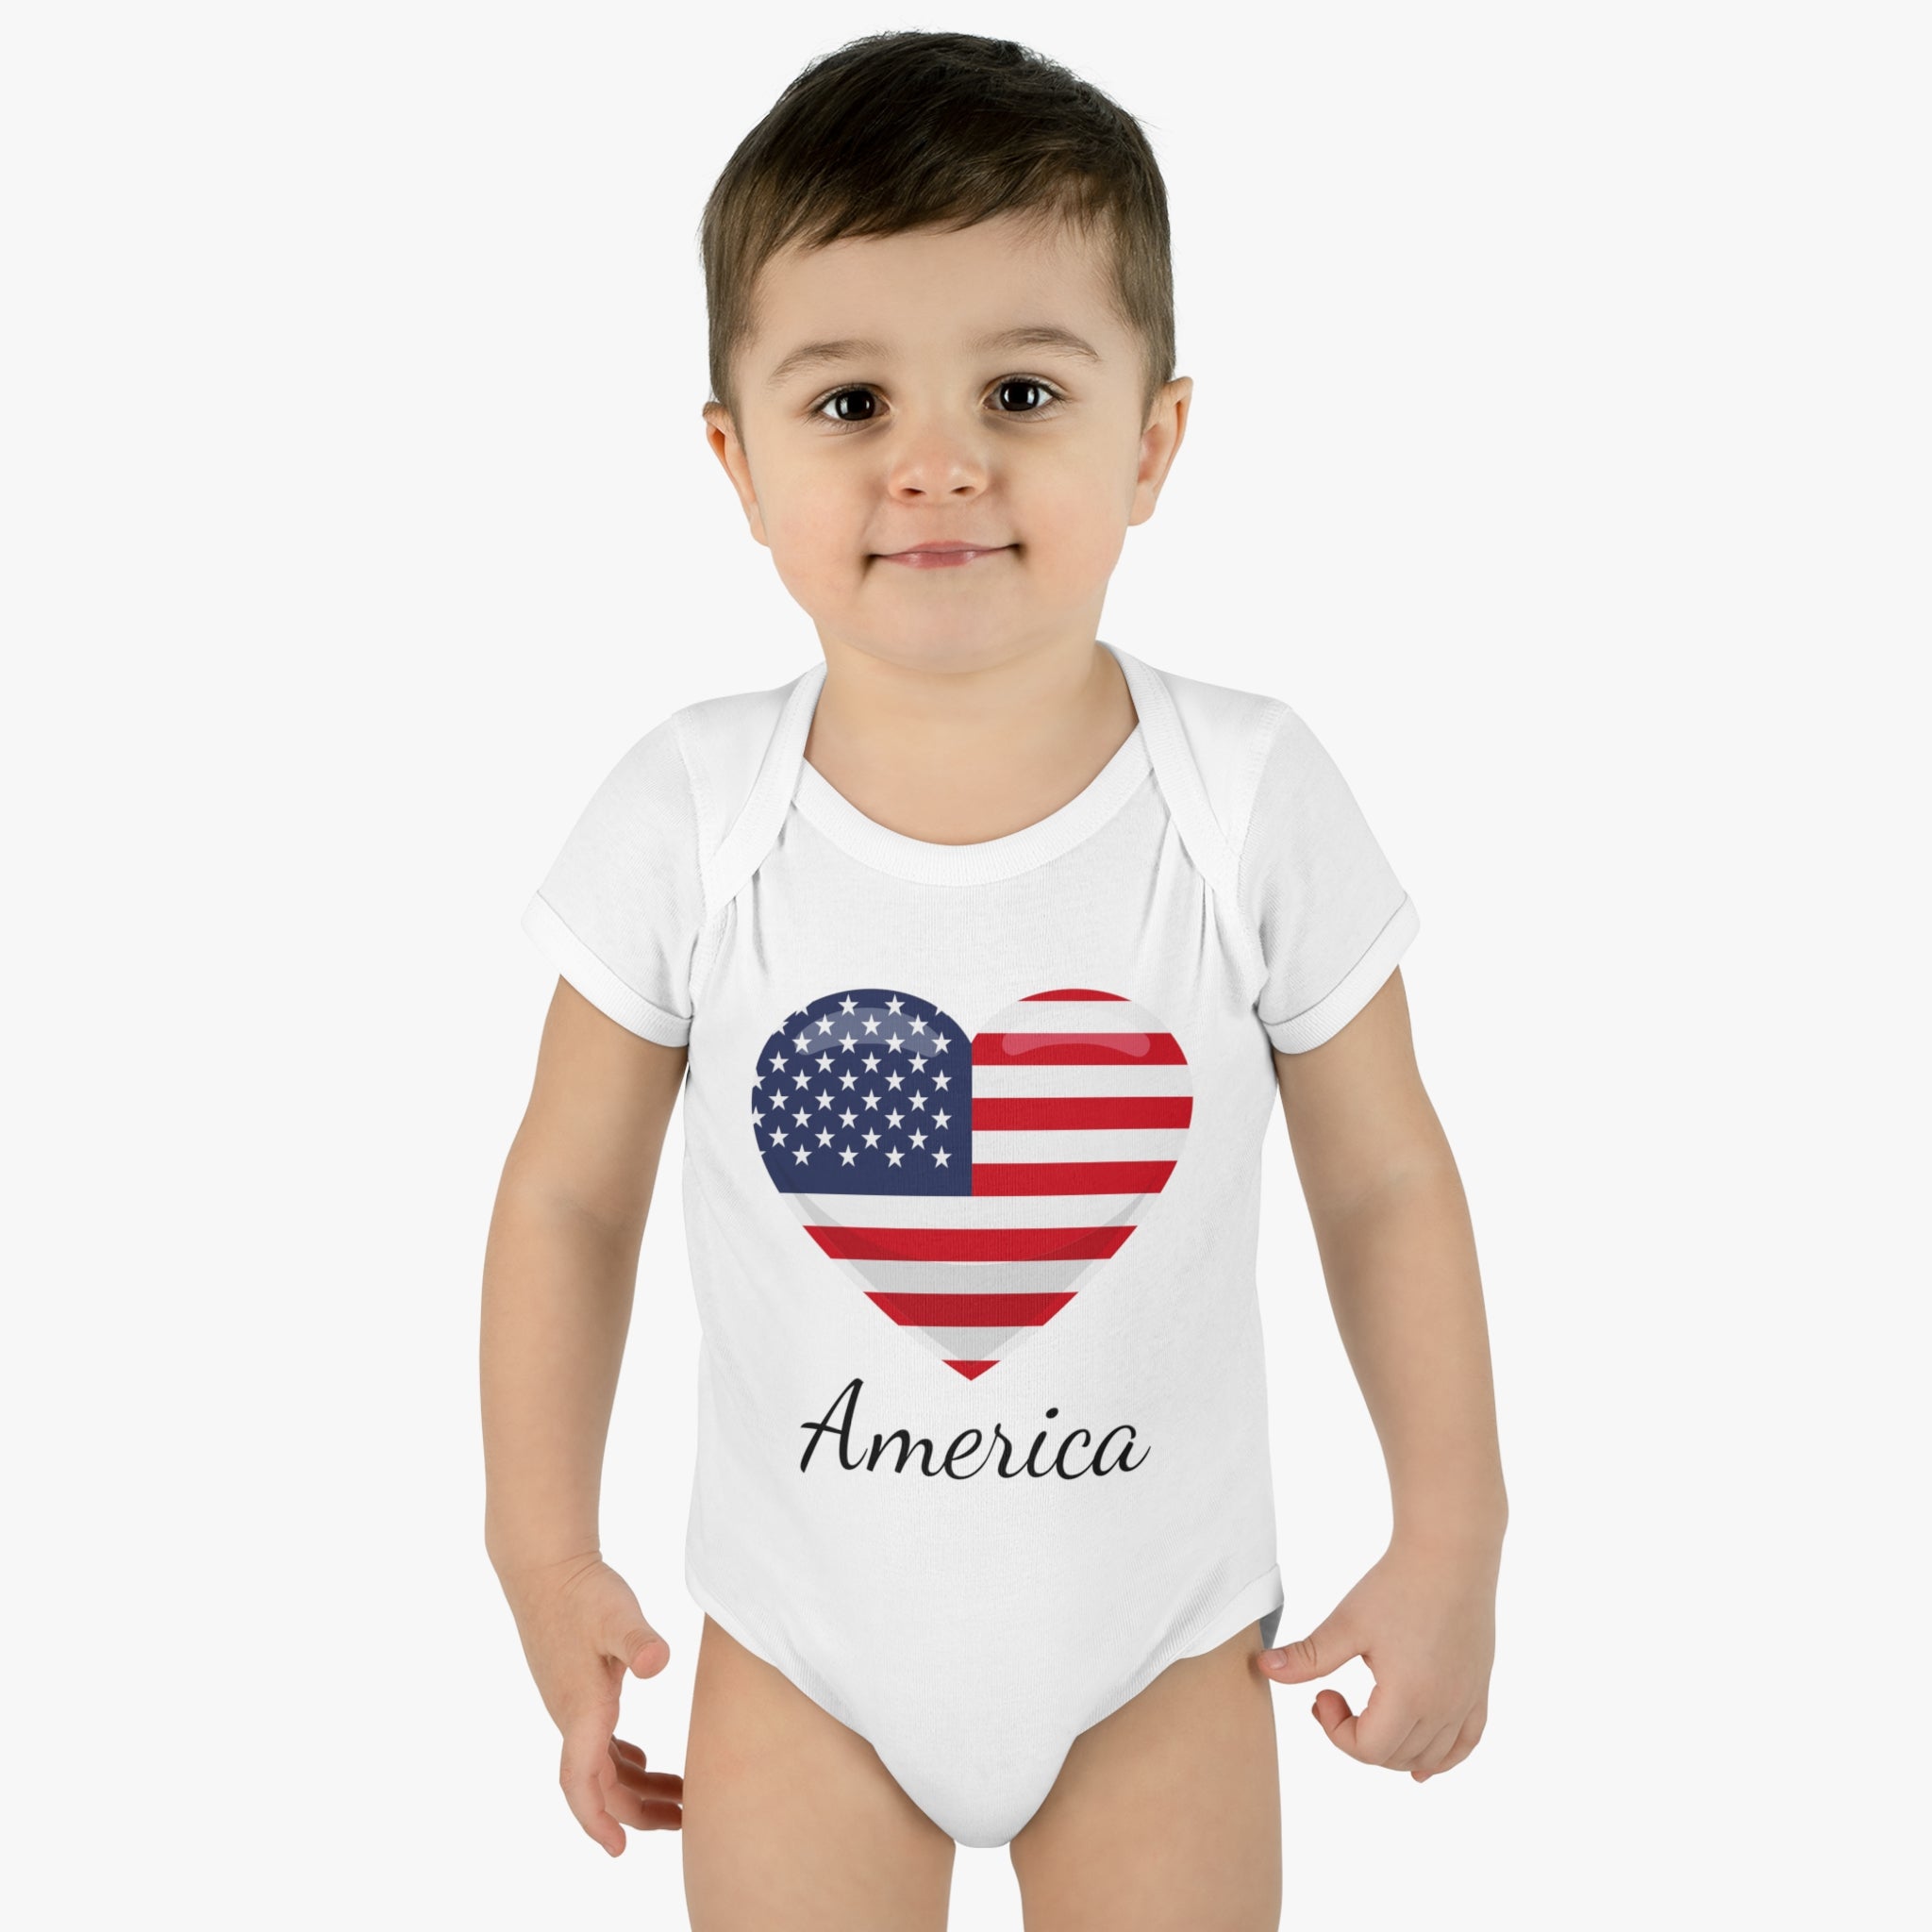 America Big Heart Baby Bodysuit